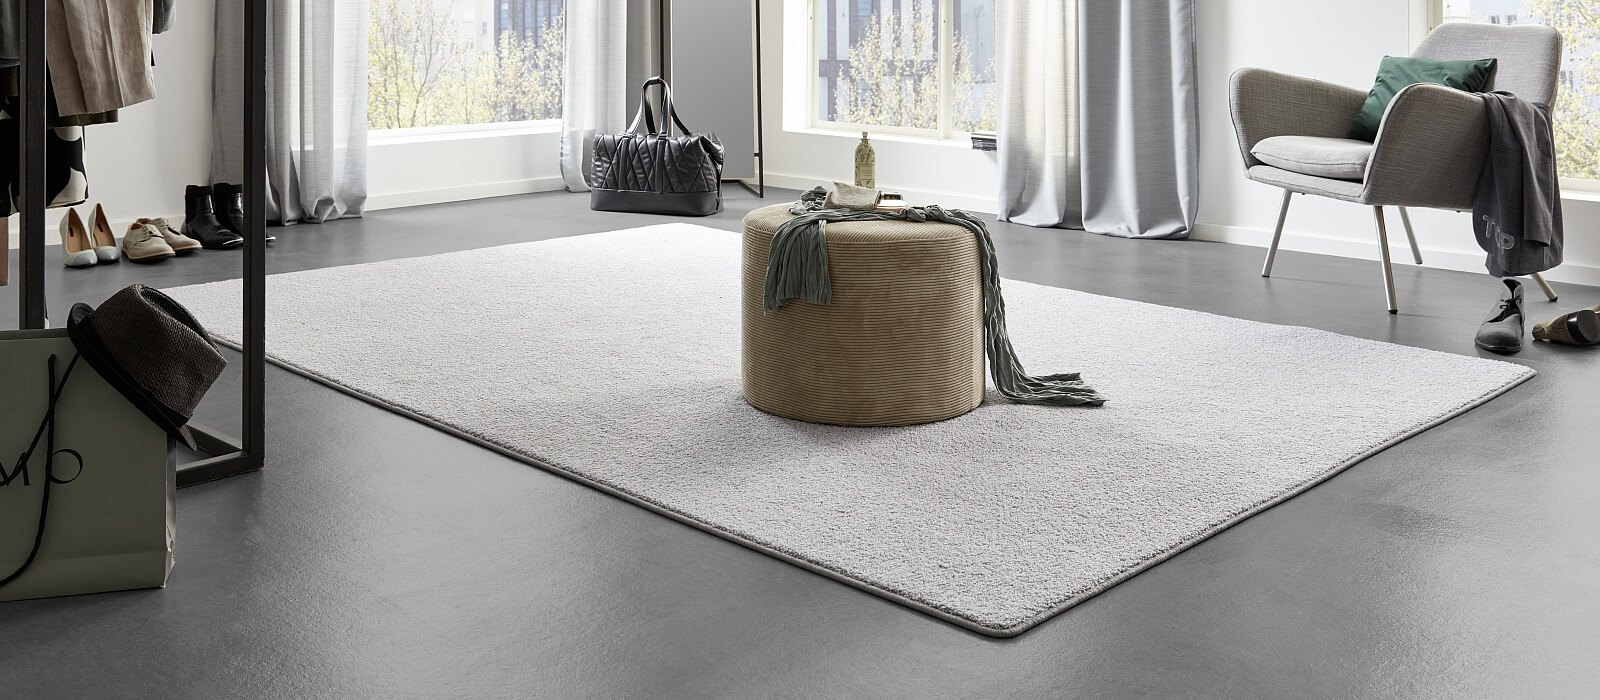 Flatweave carpet with a geometric pattern